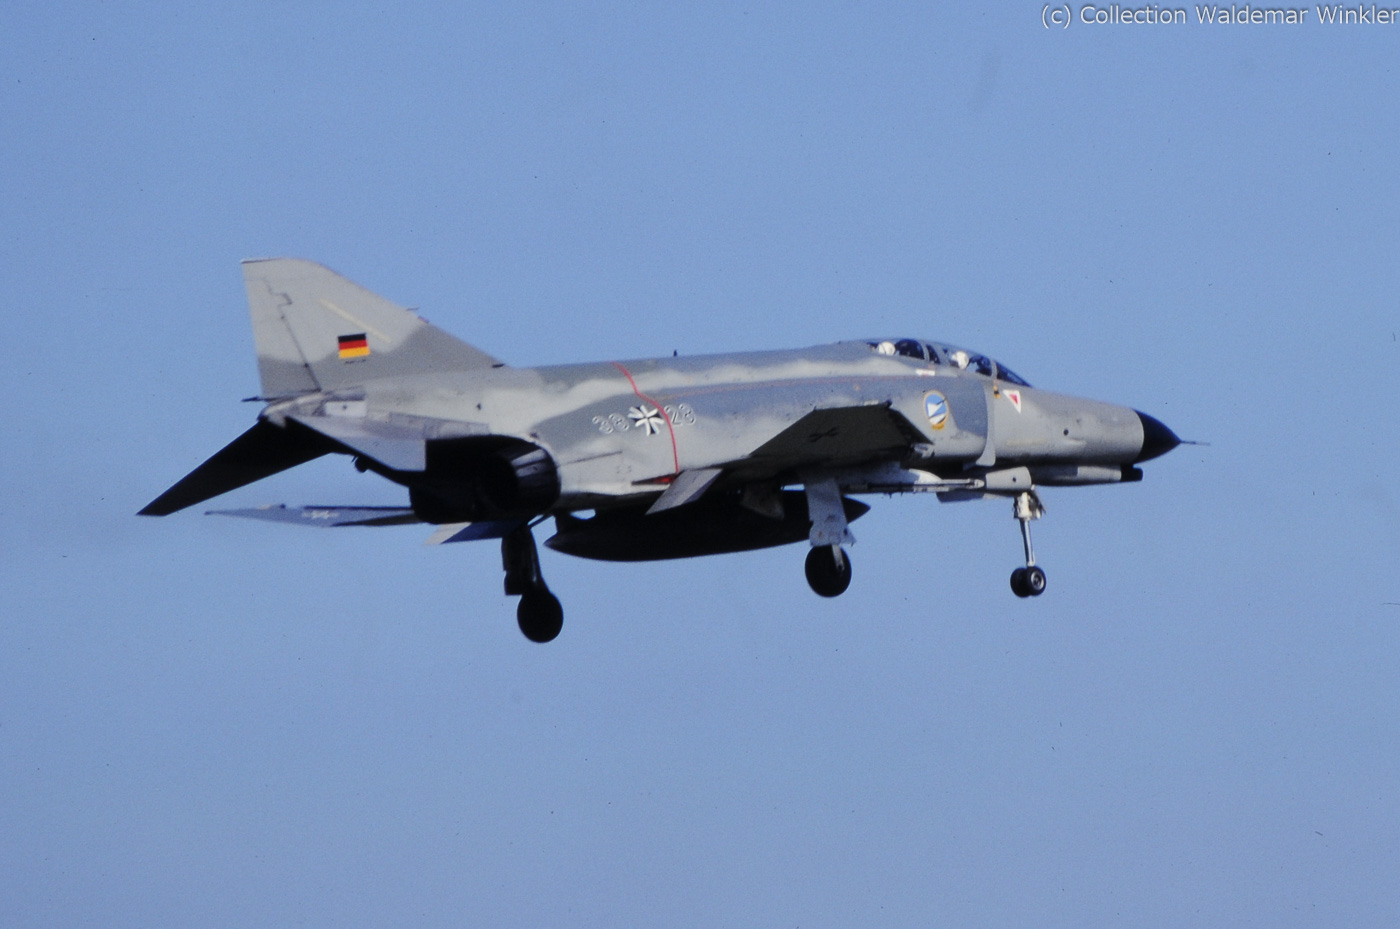 F-4_Phantom_II_DSC_1337.jpg